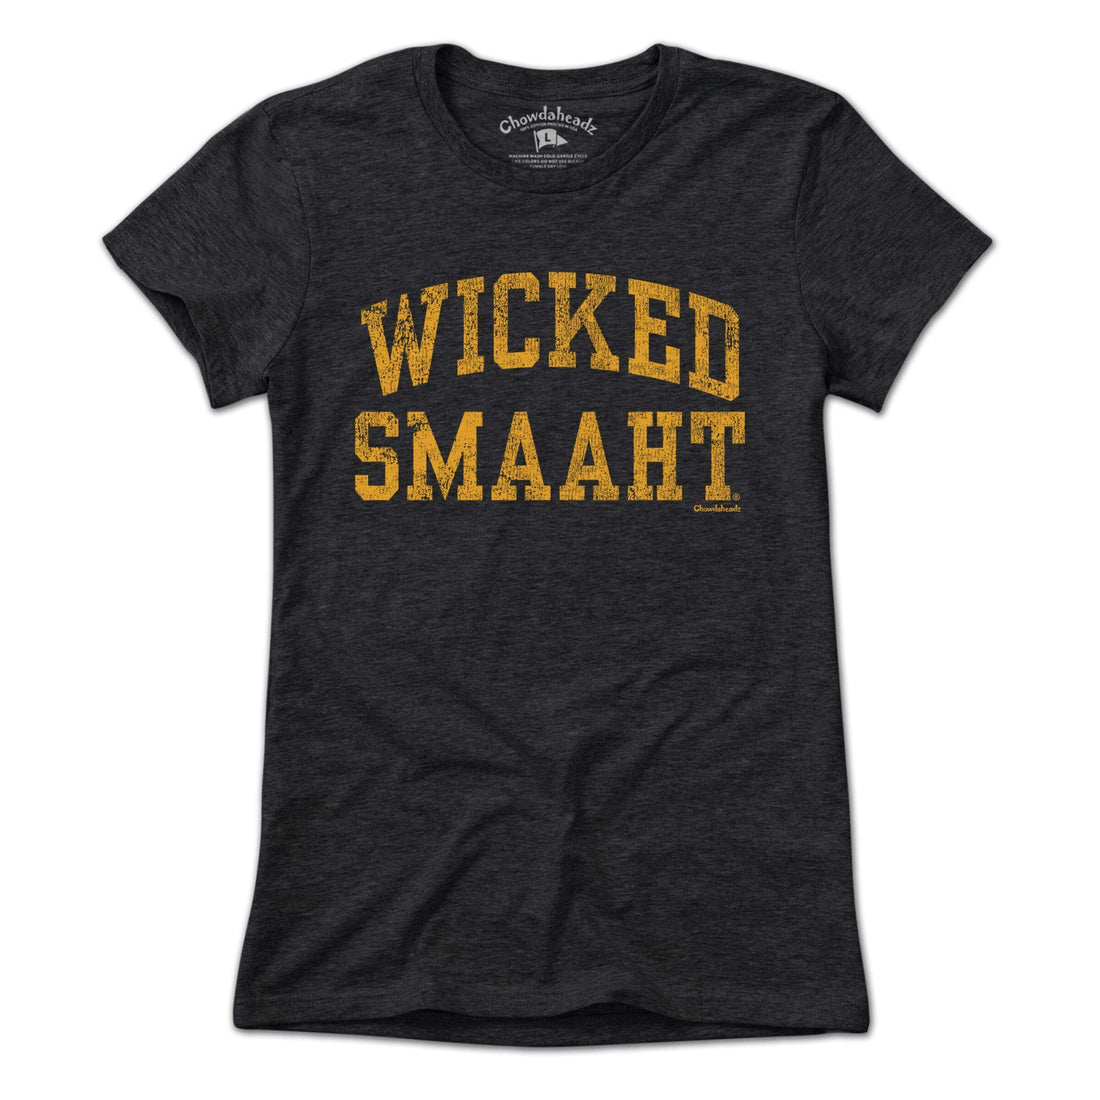 Wicked Smaaht Black & Gold T-Shirt - Chowdaheadz